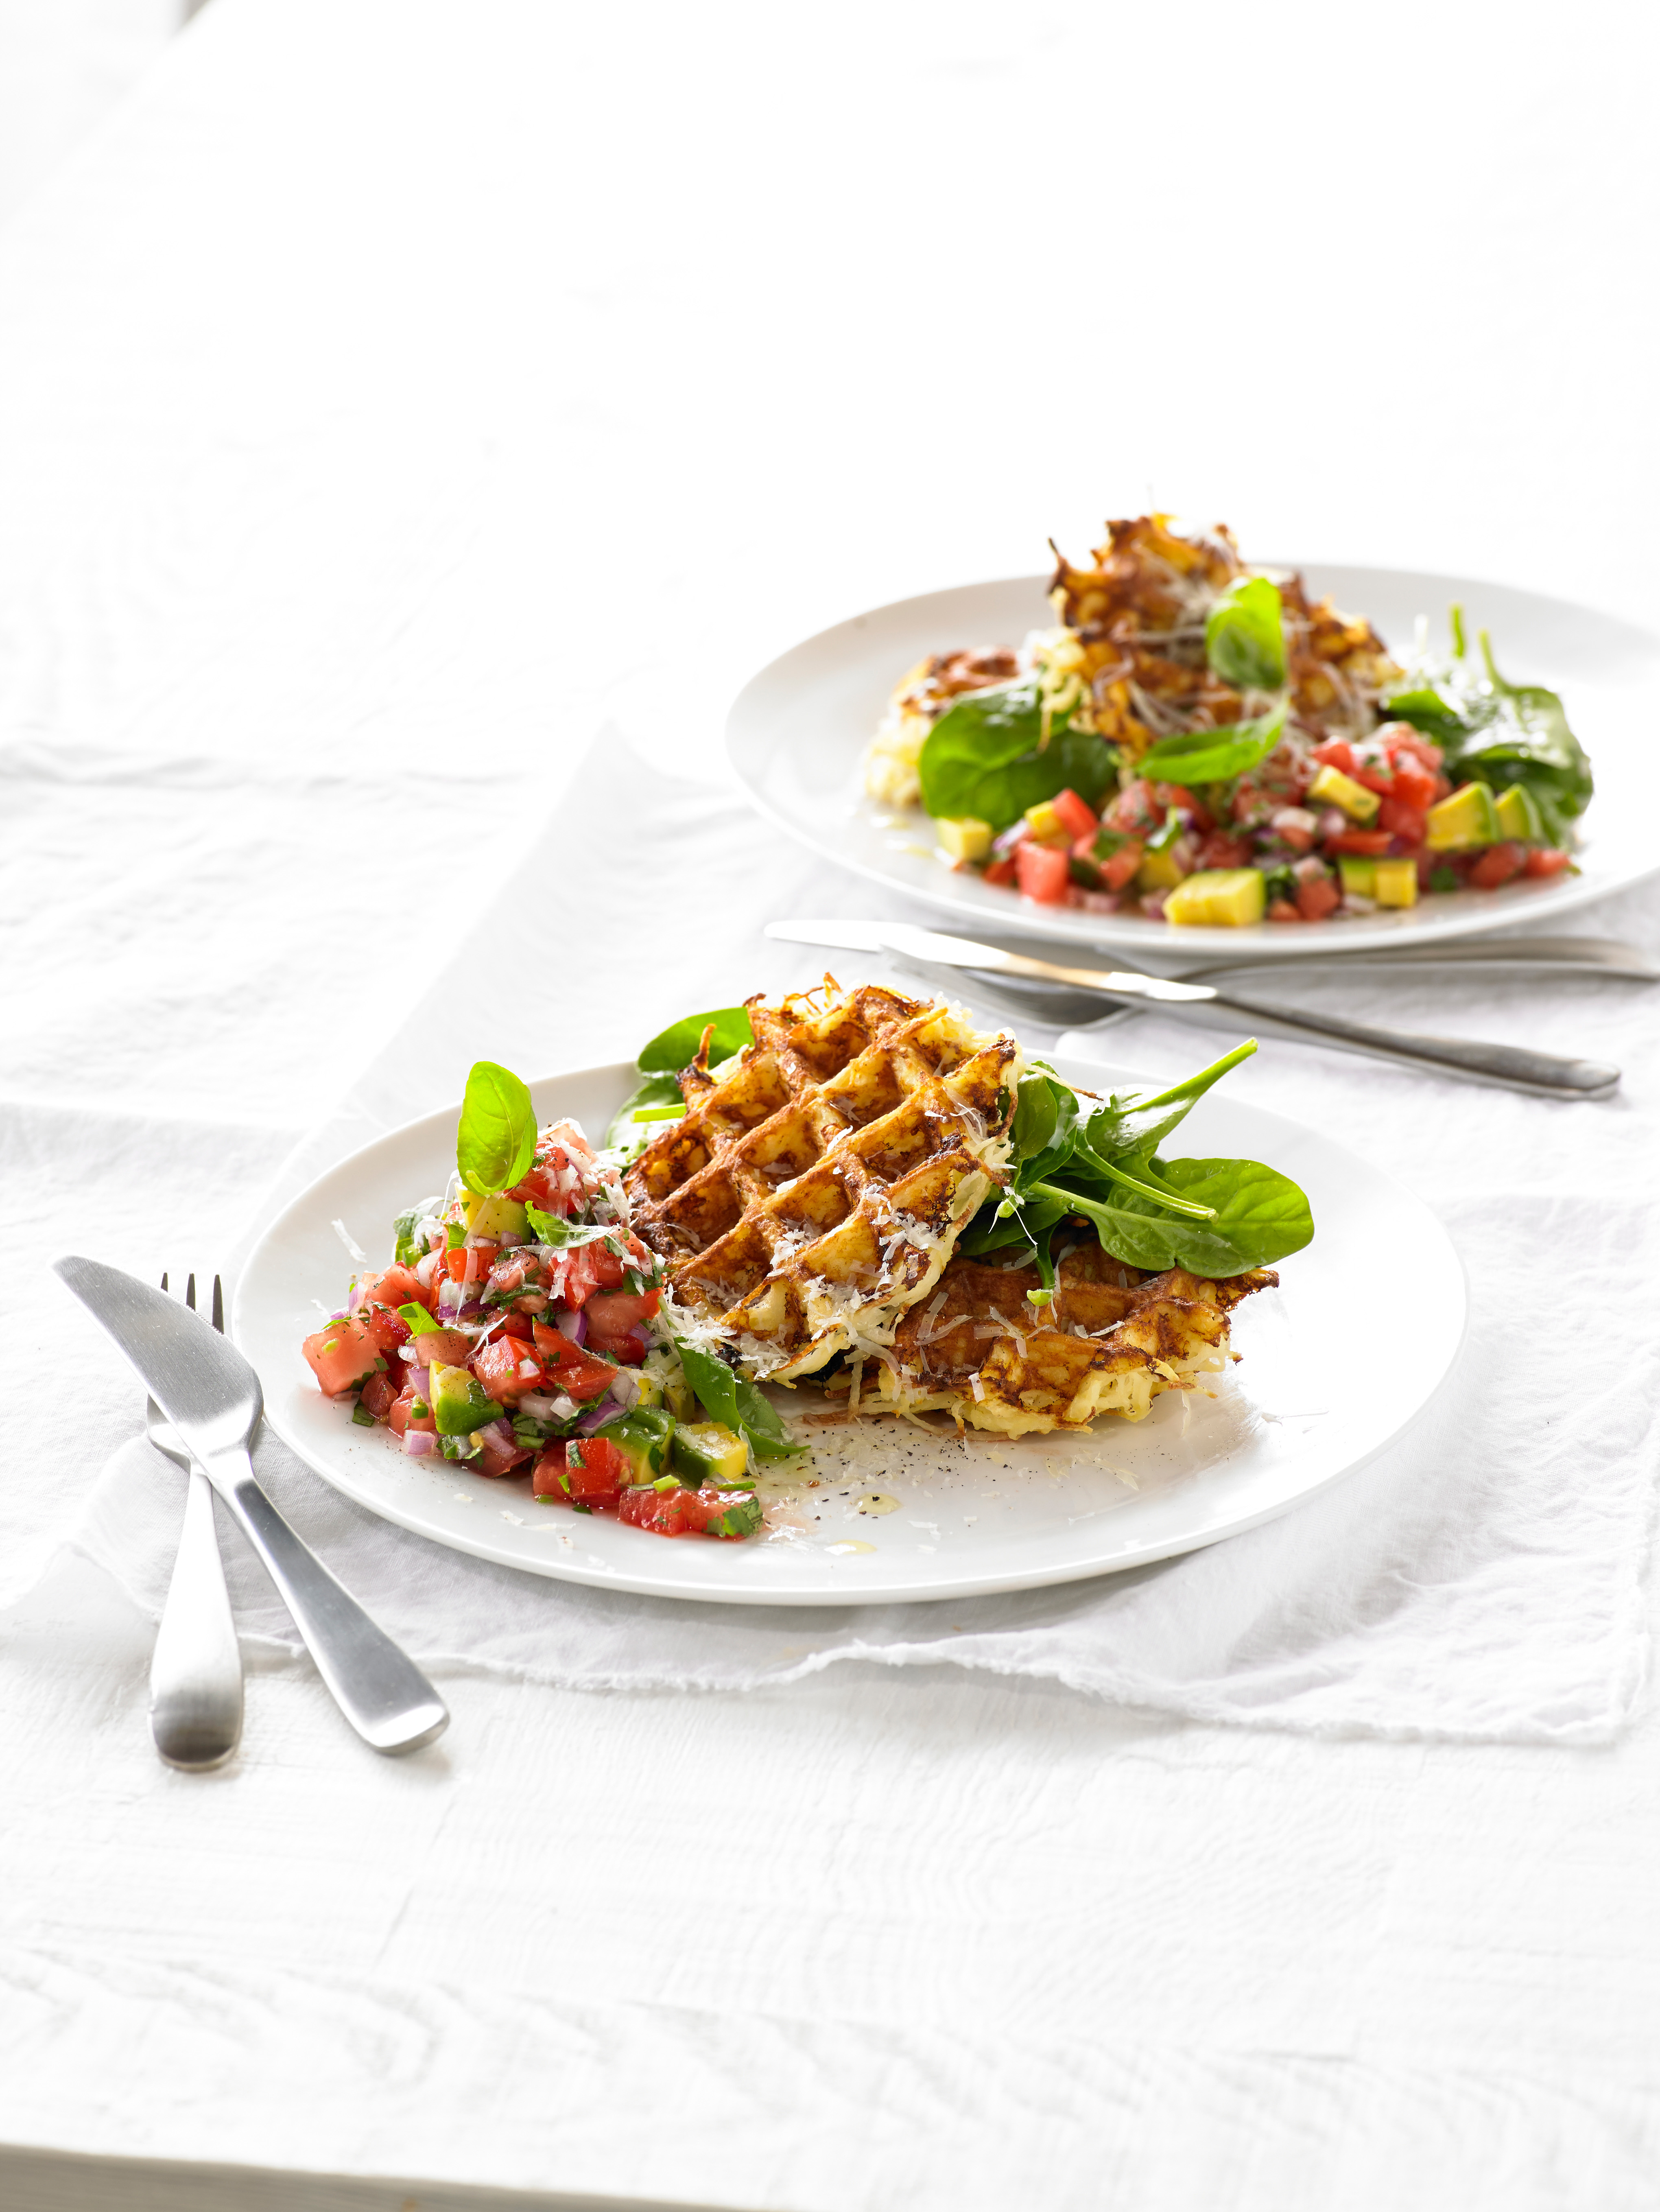 https://prod-app.breville.com/original/recipe/1651024043/Hash+Brown+Waffles+with+Tomato+Salsa.jpg